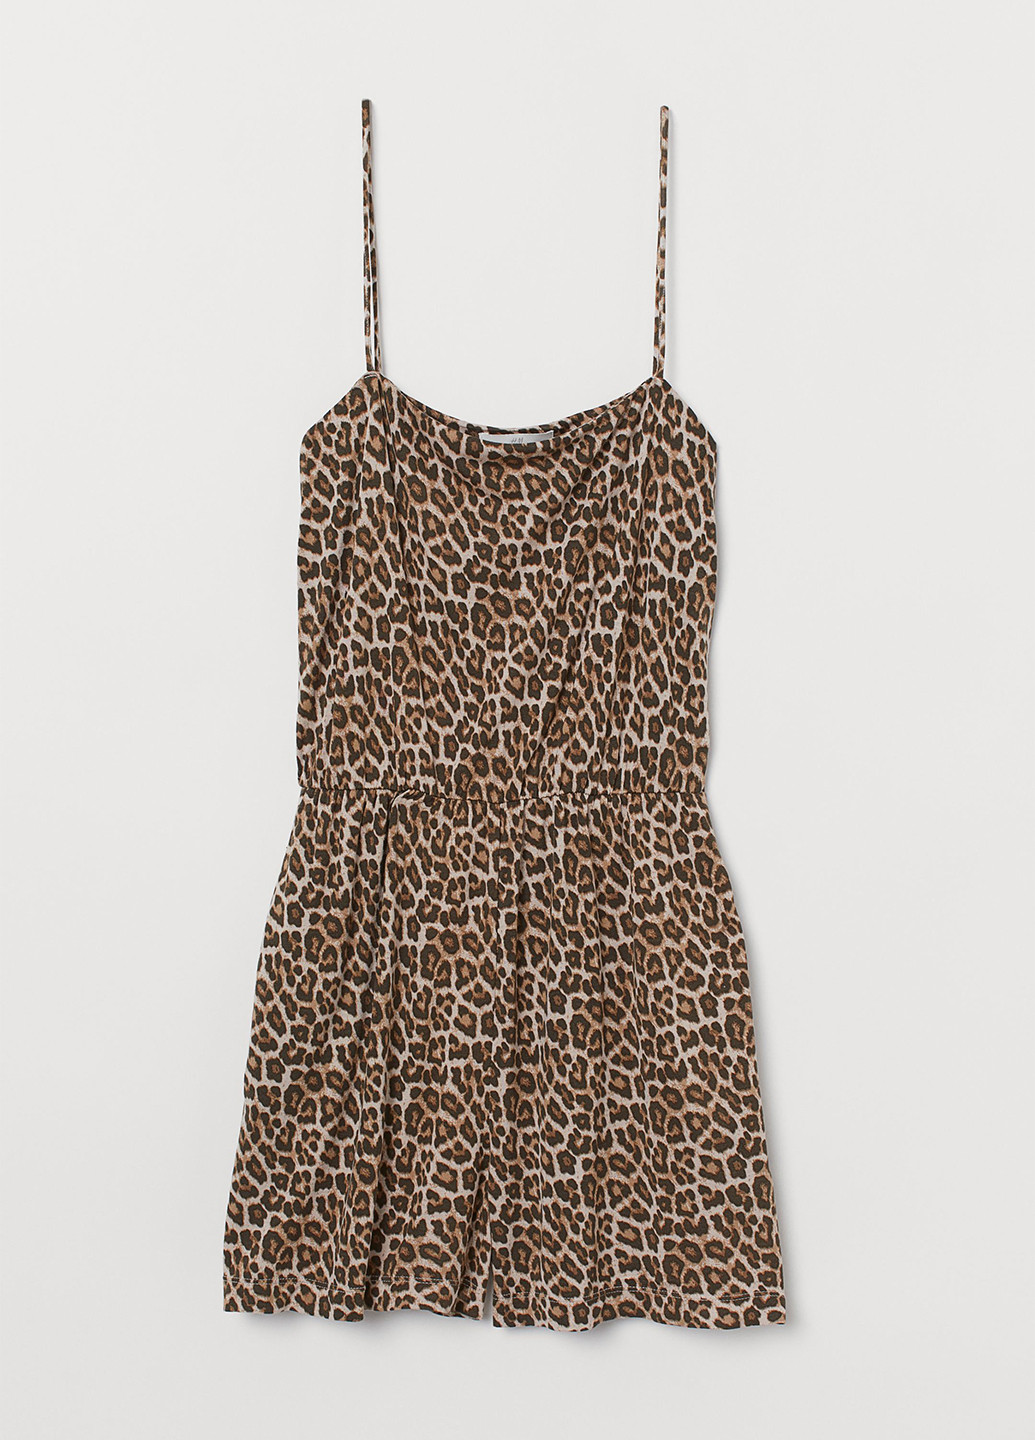 Комбинезон H&M комбинезон-шорты леопардовый коричневый кэжуал вискоза